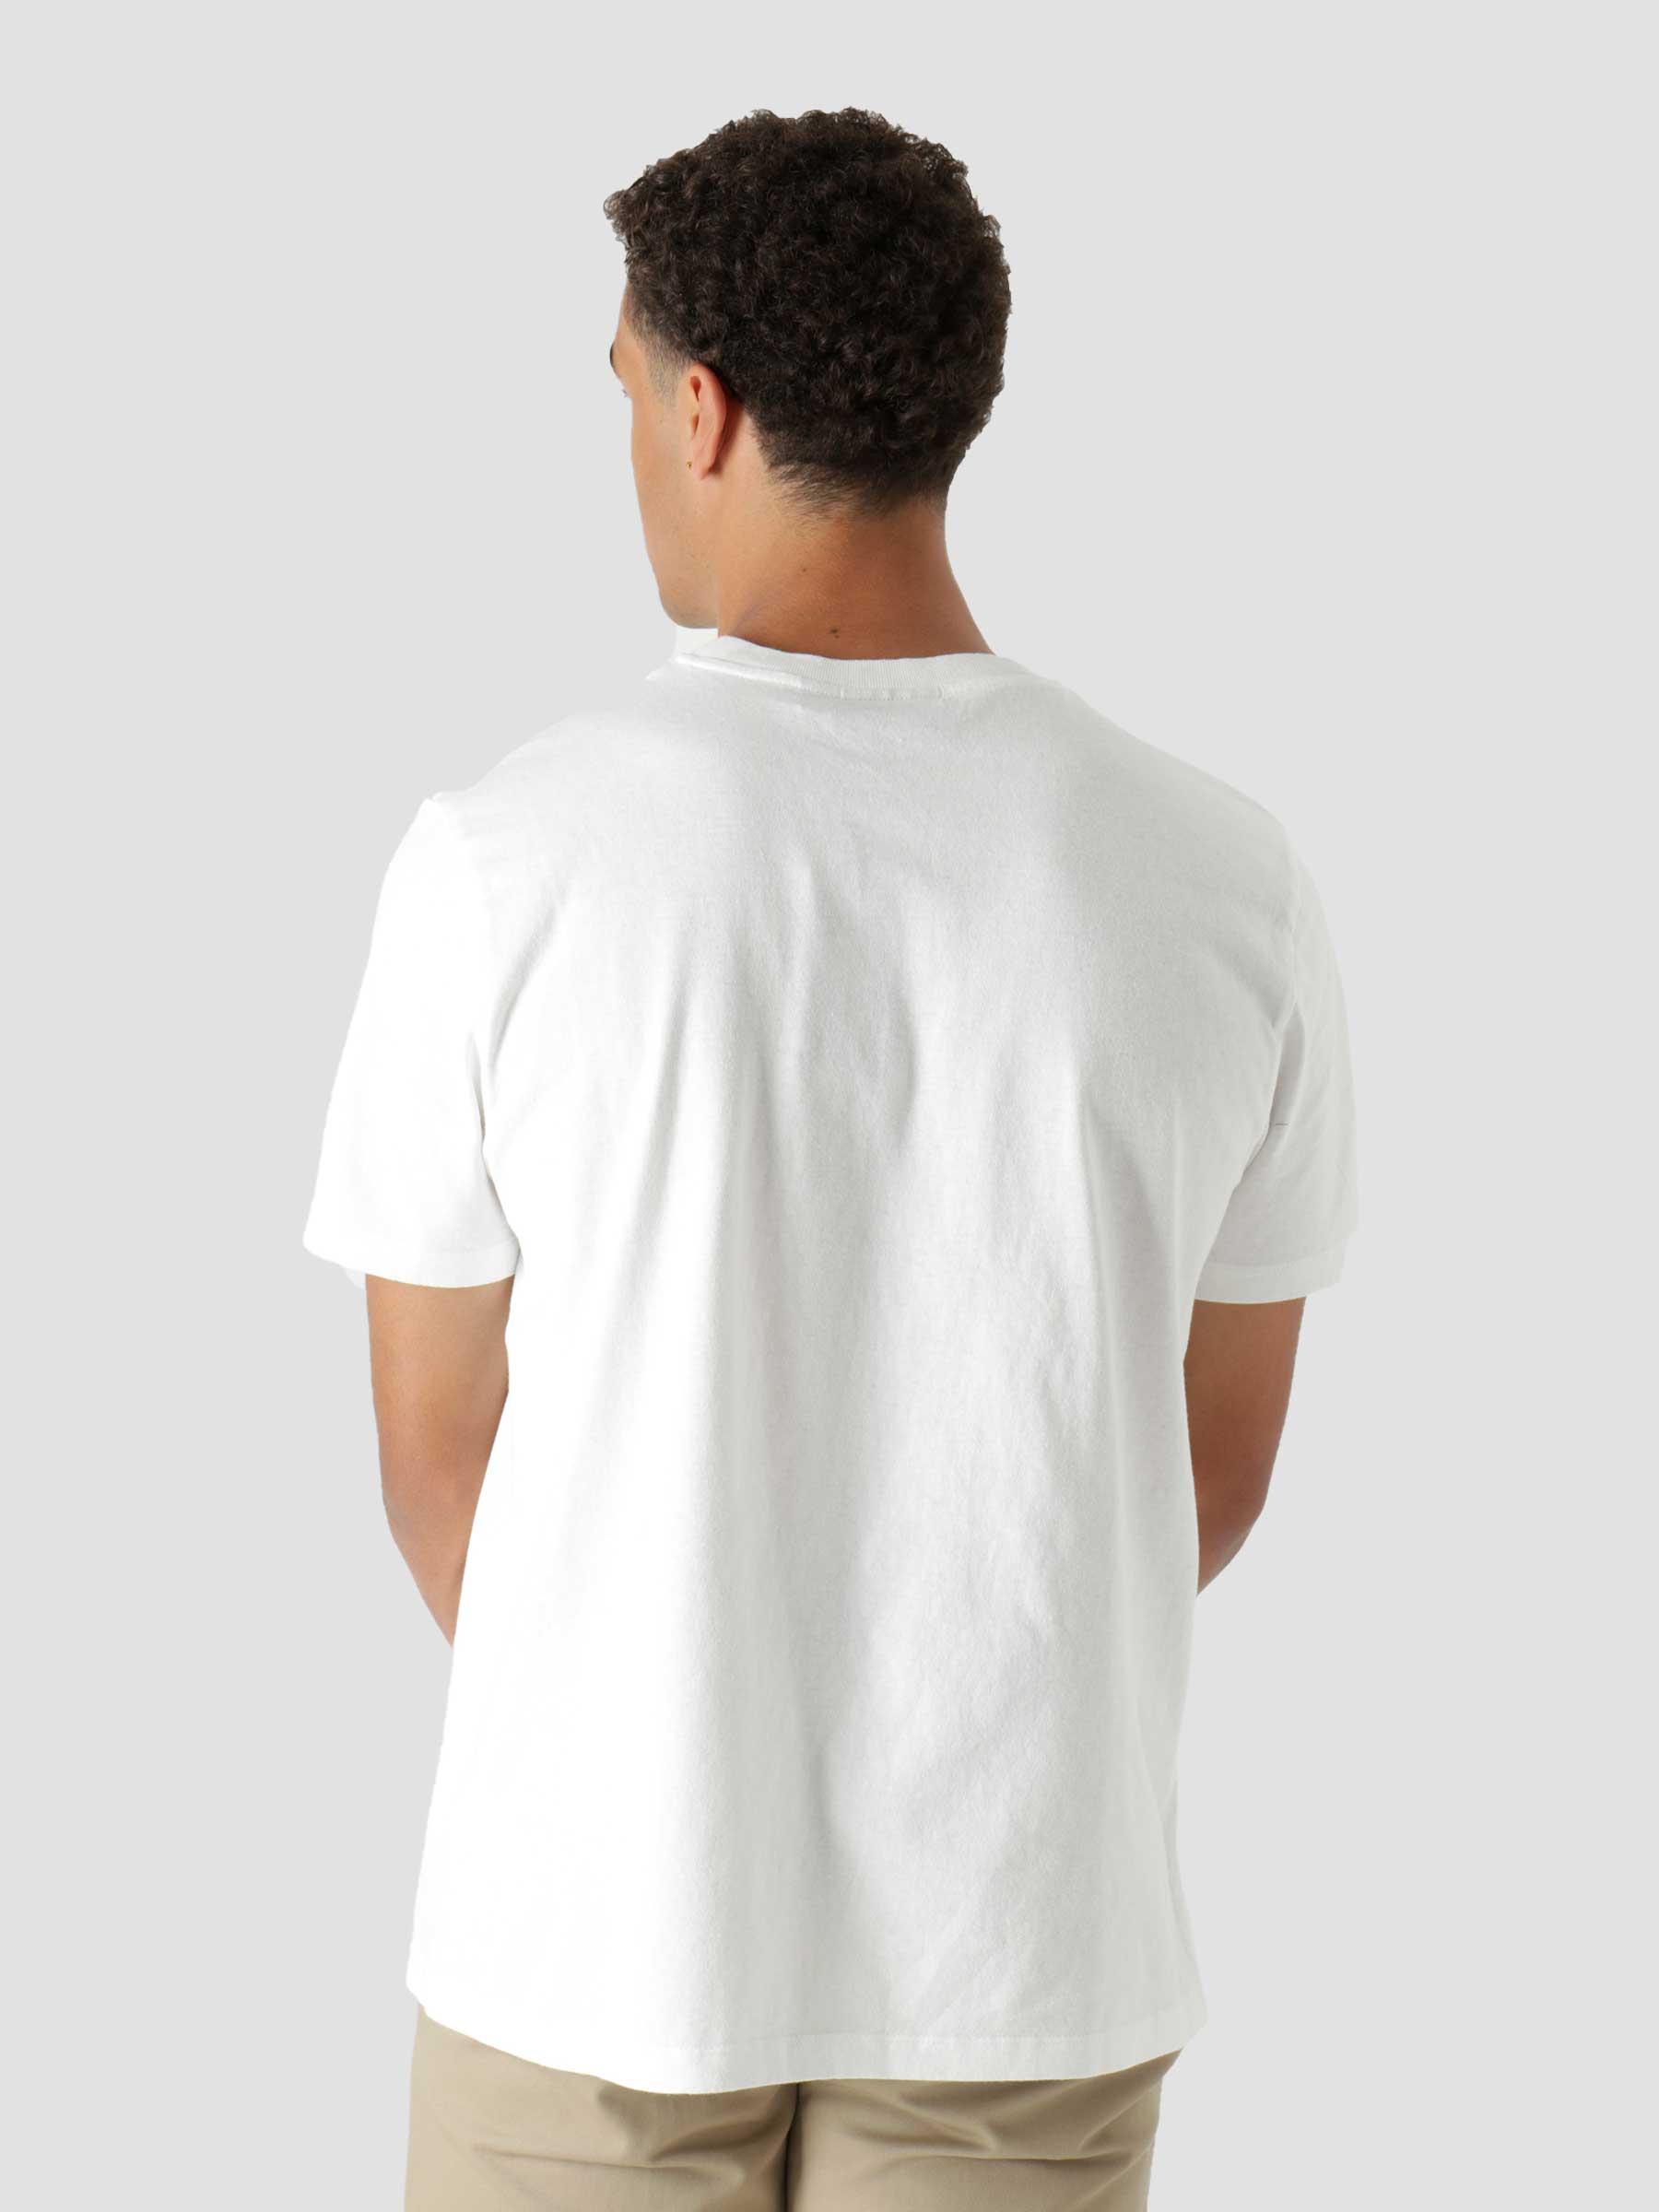 Photo Finish T-Shirt White 46200